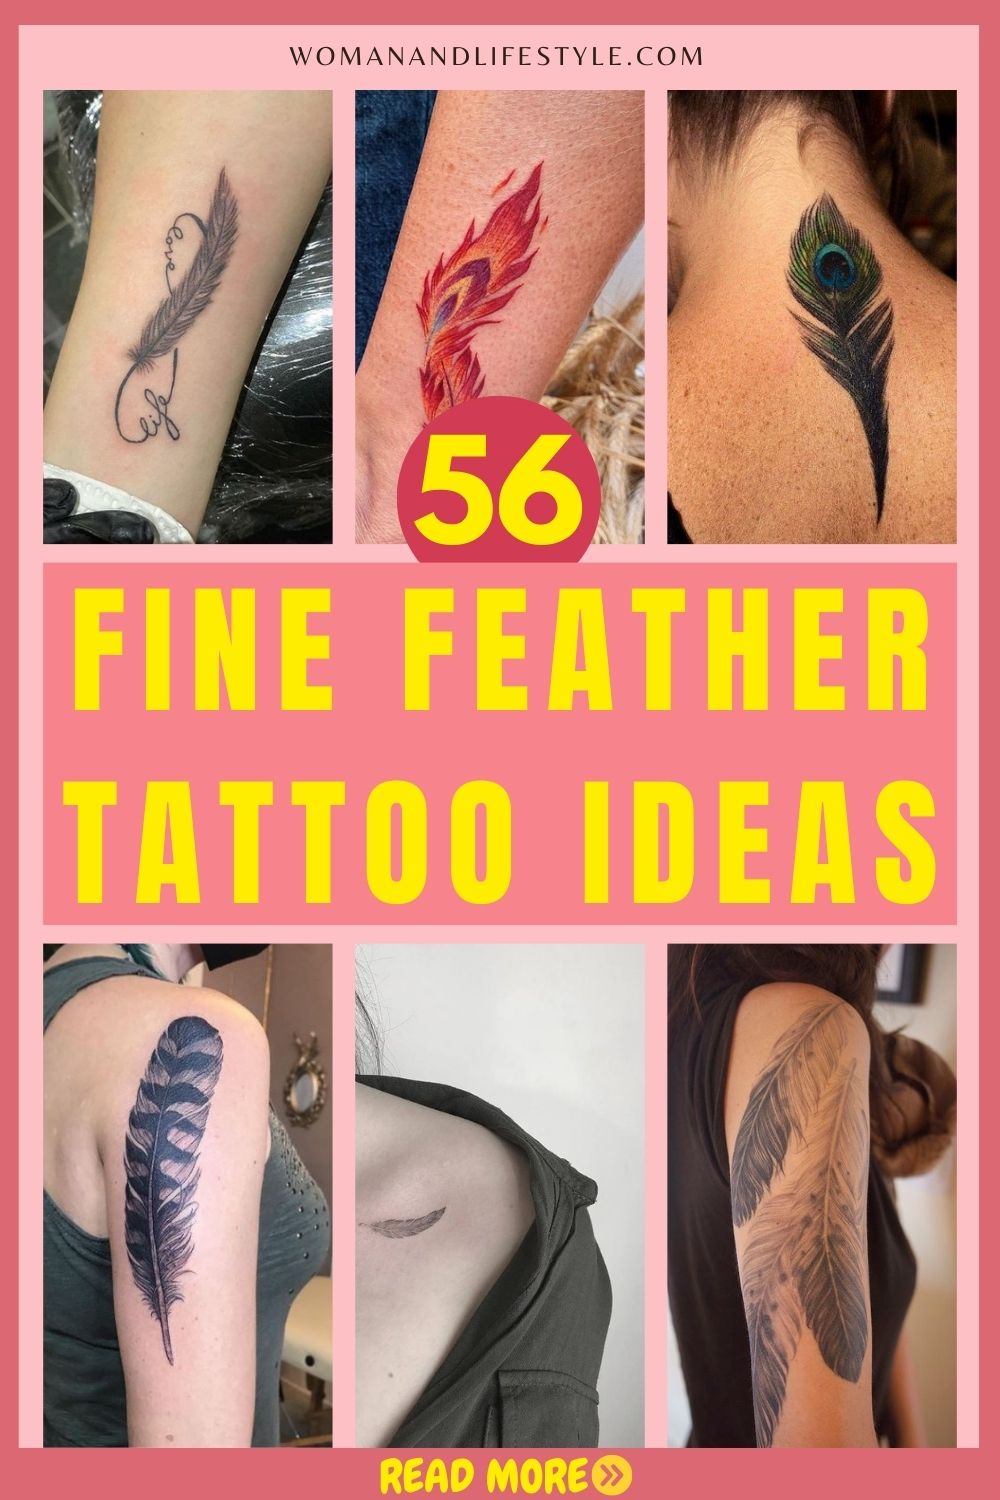 Feather-Tattoo-Ideas-Pin